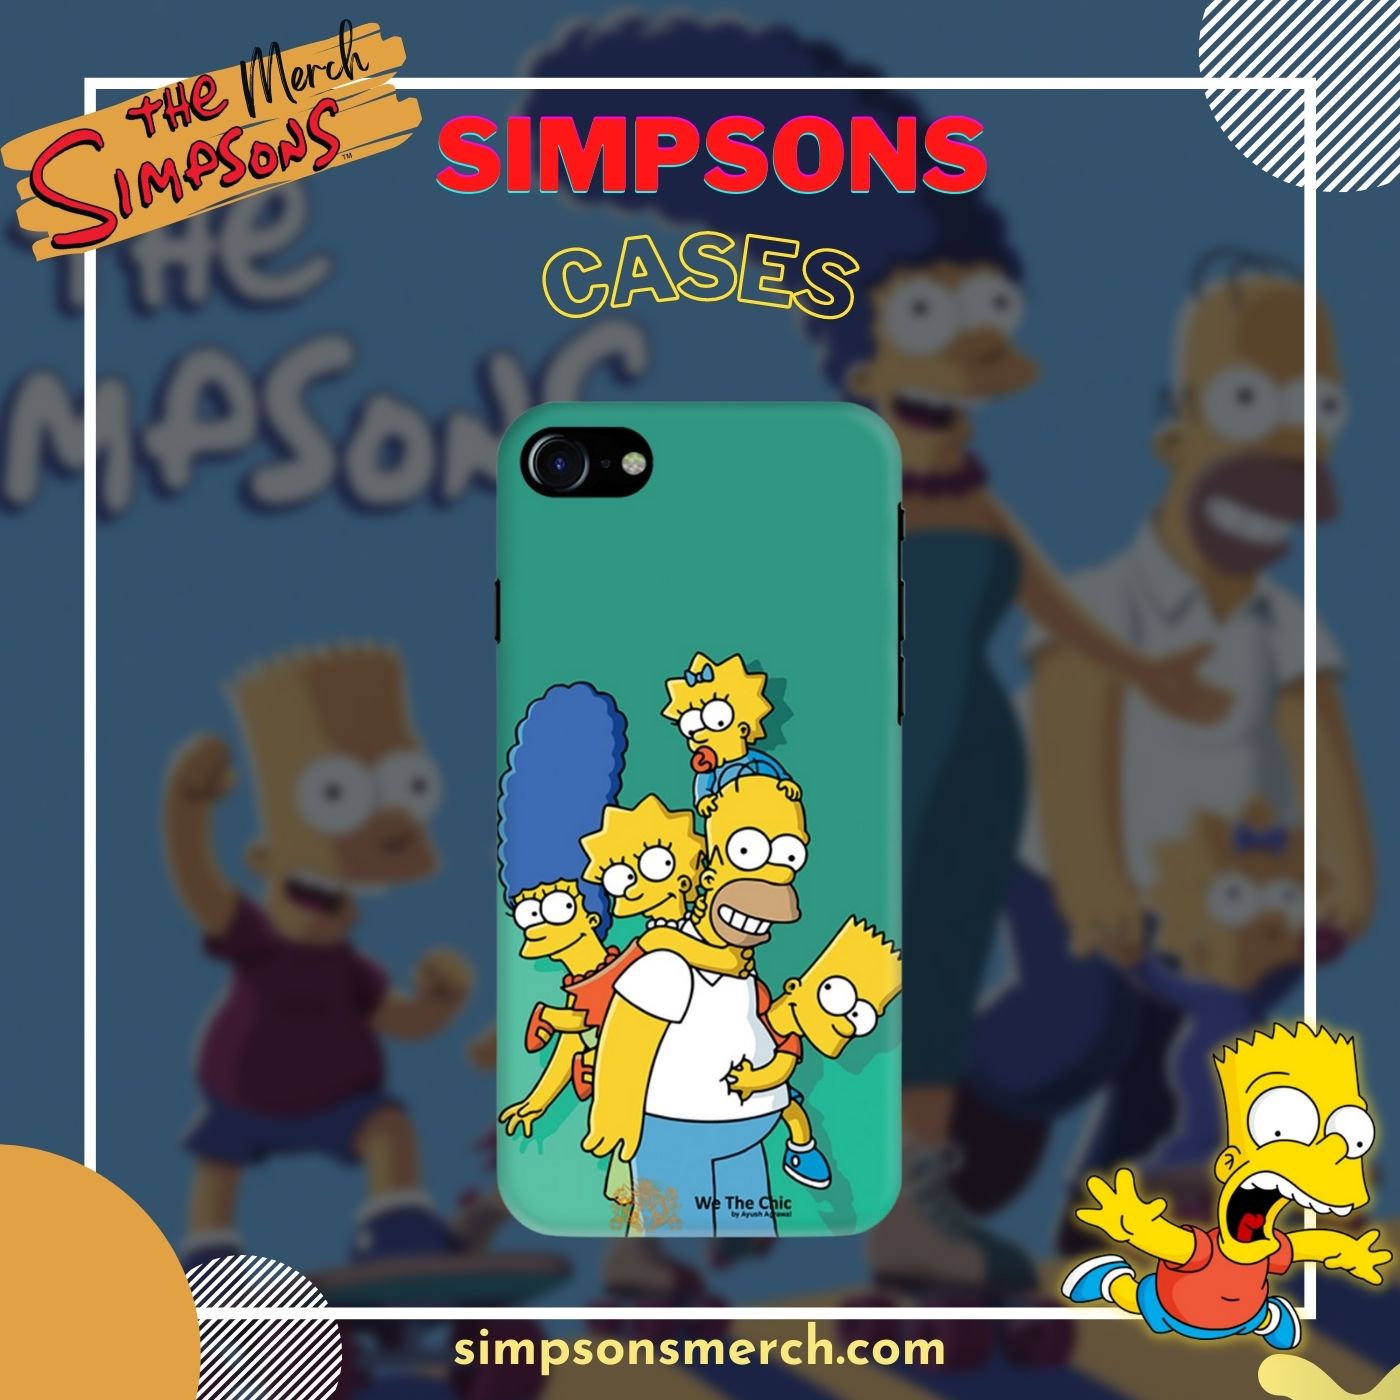 SimpSons Cases - The Simpsons Merch